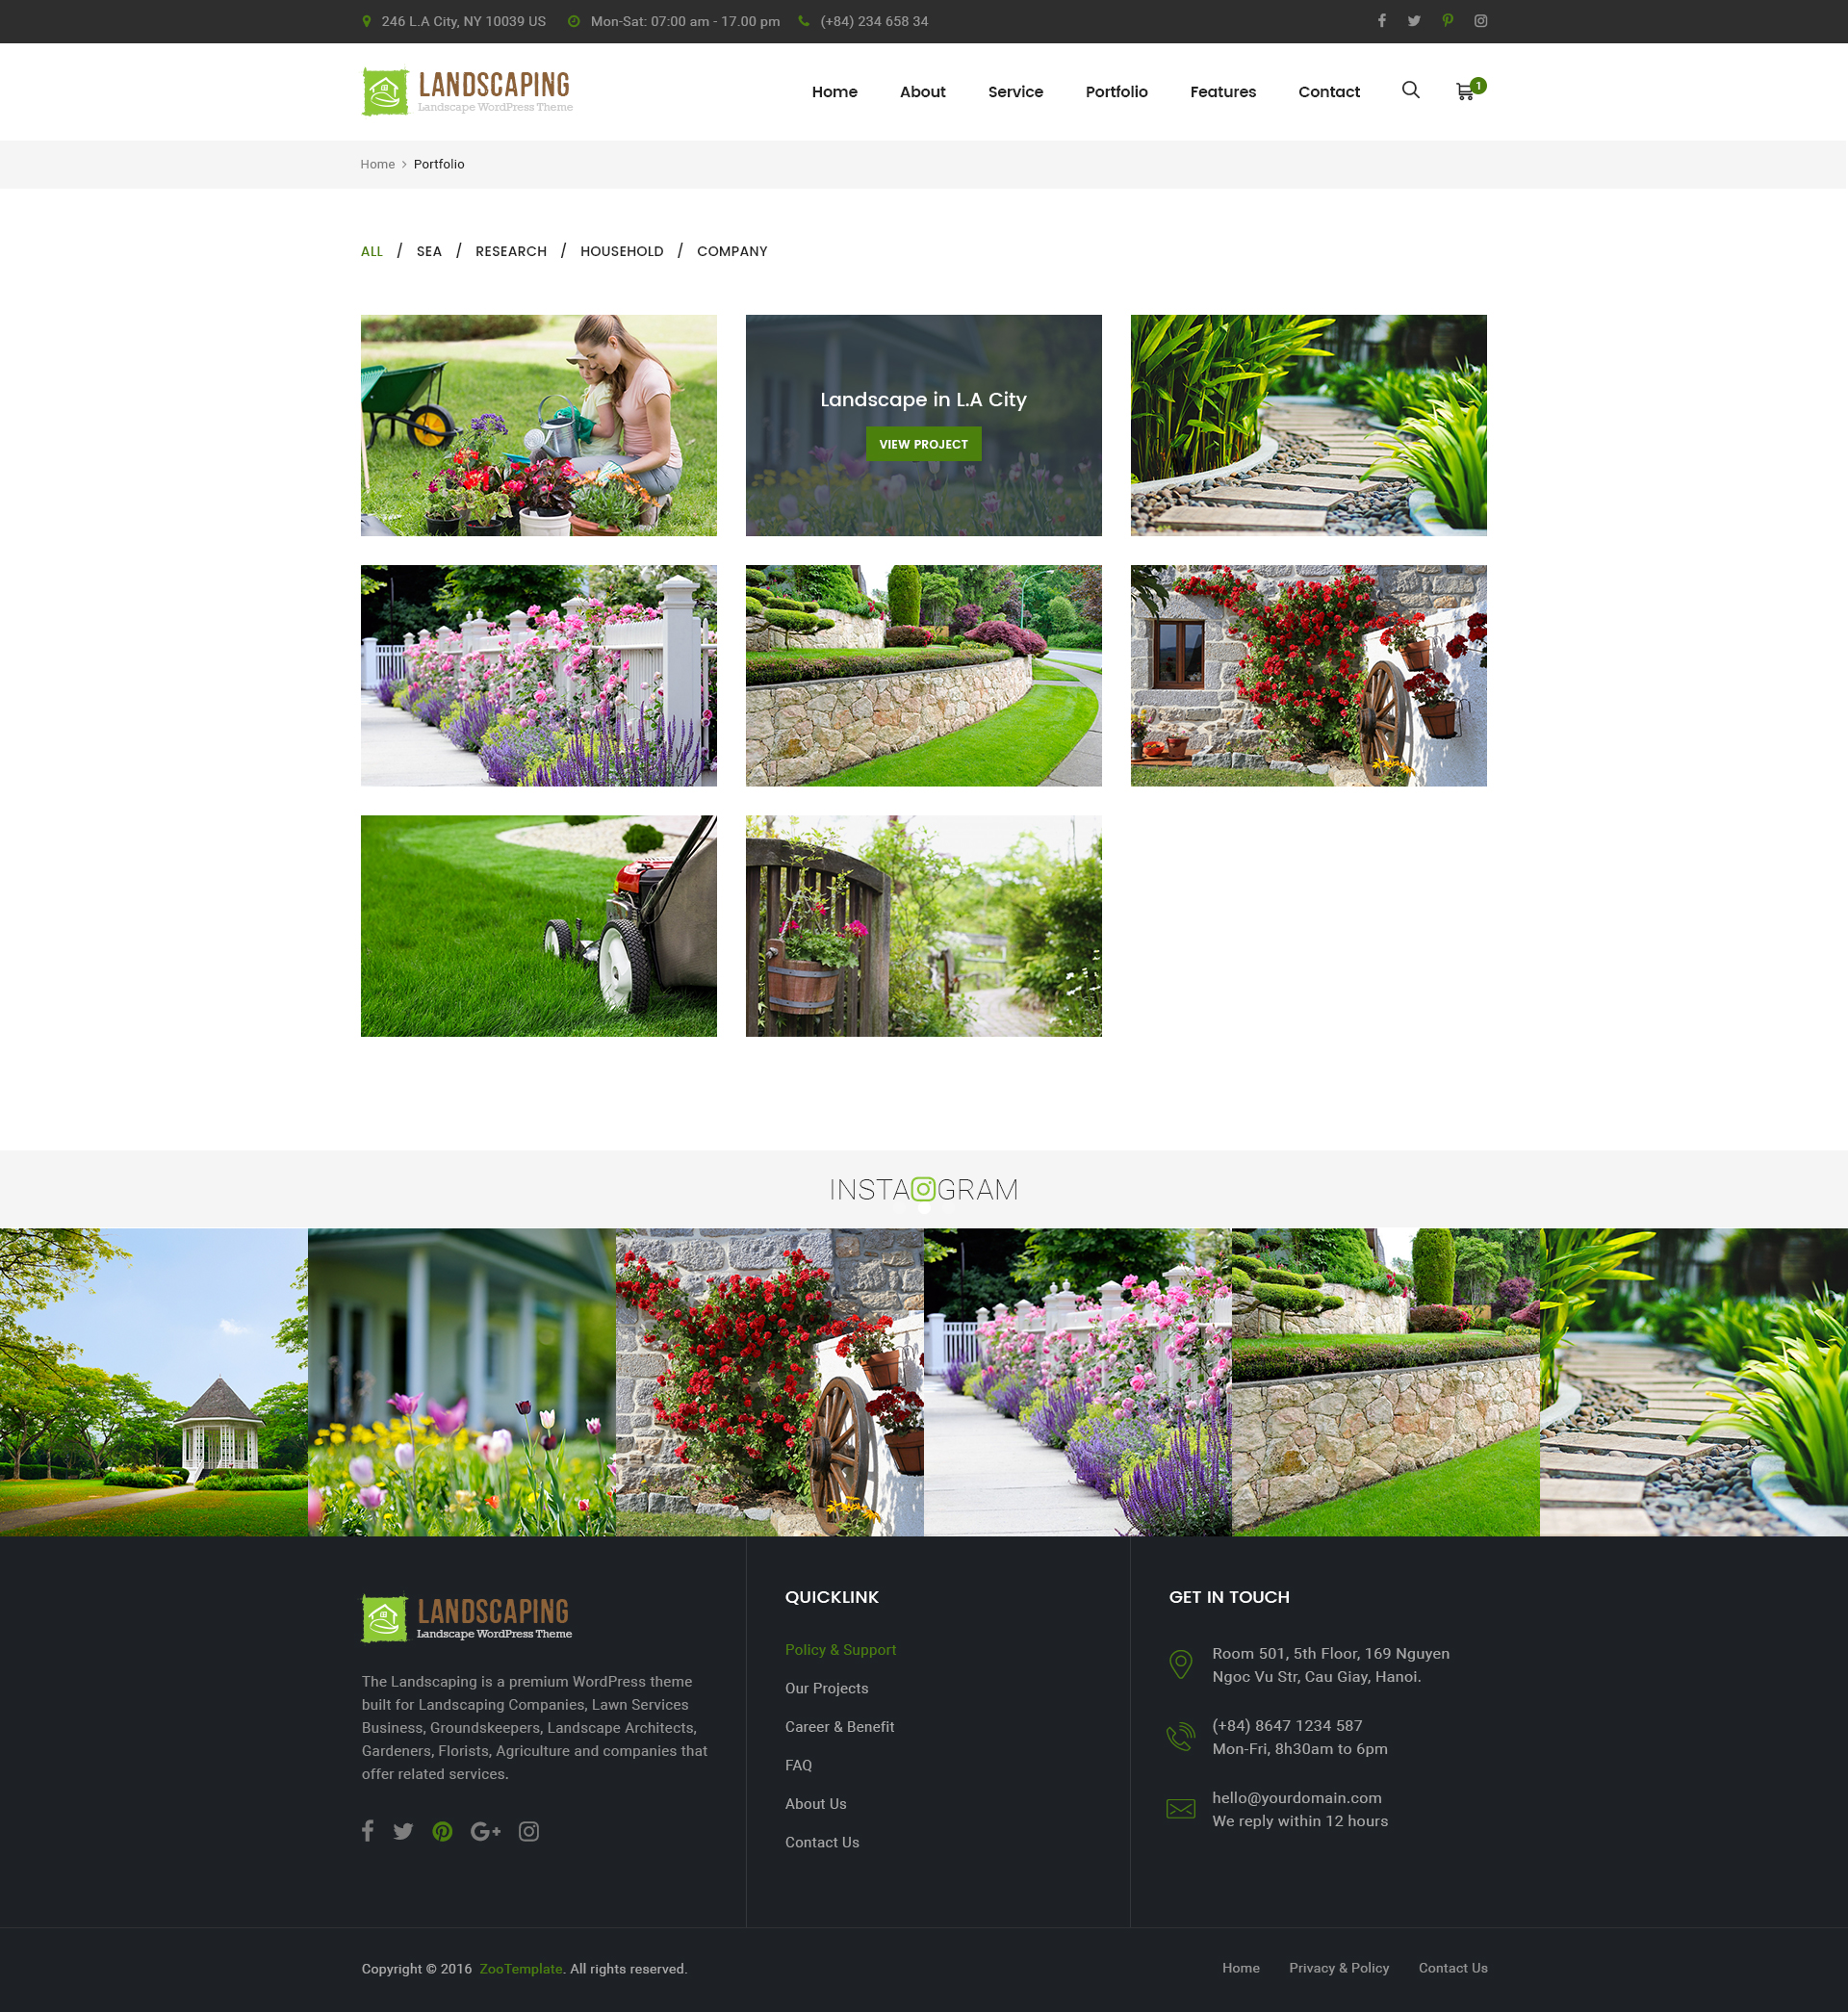 Best Landscaping Company Websites, Landscaping Company Websites